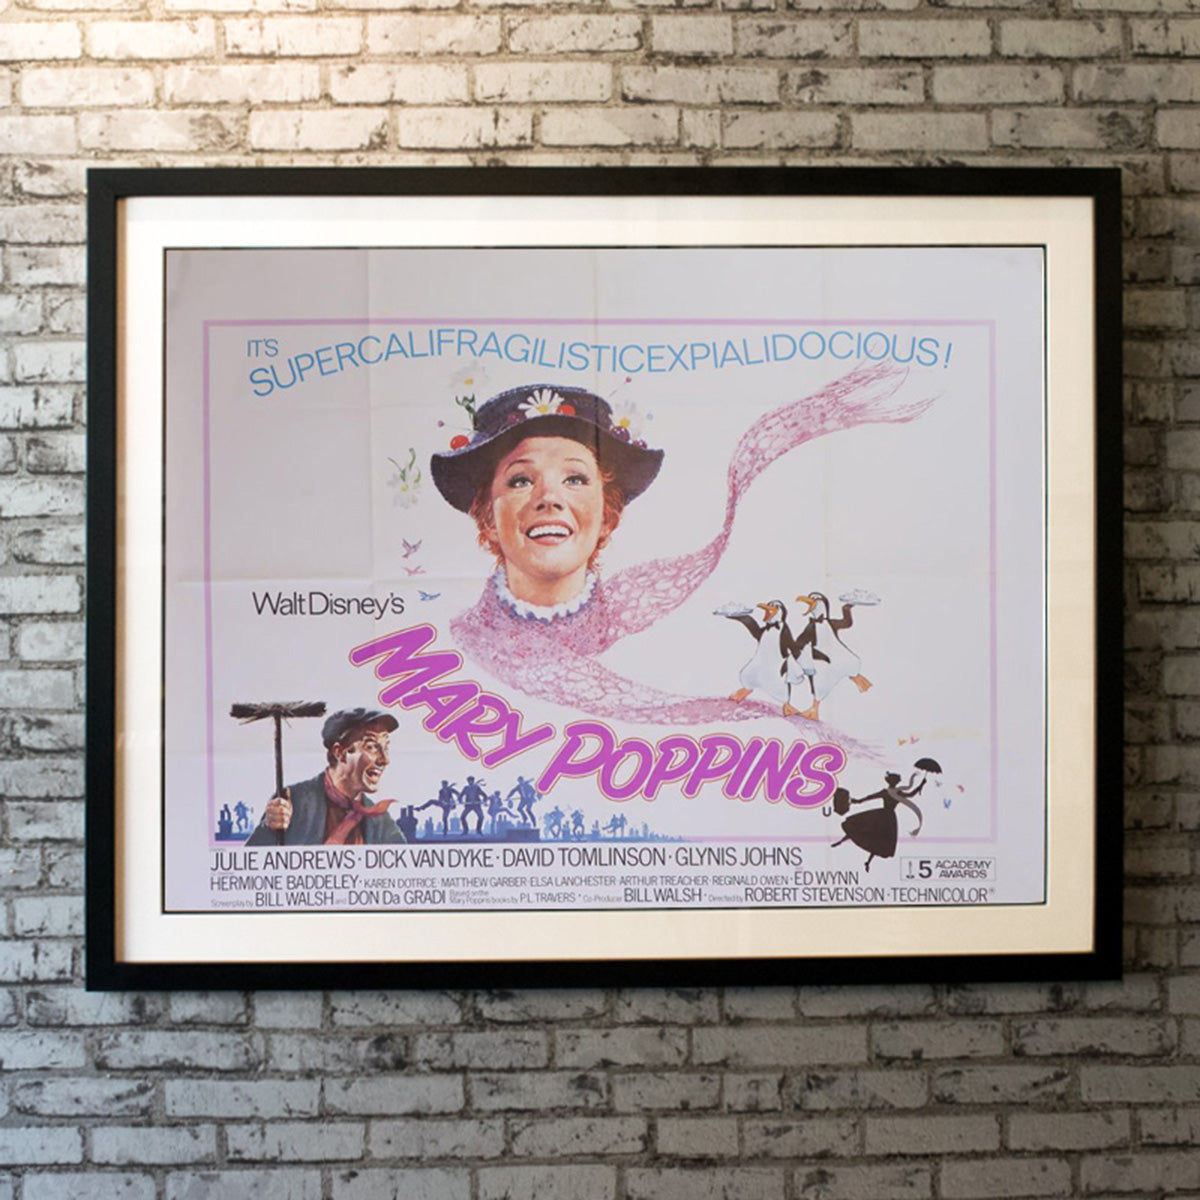 Original Movie Poster of Mary Poppins (1976R)